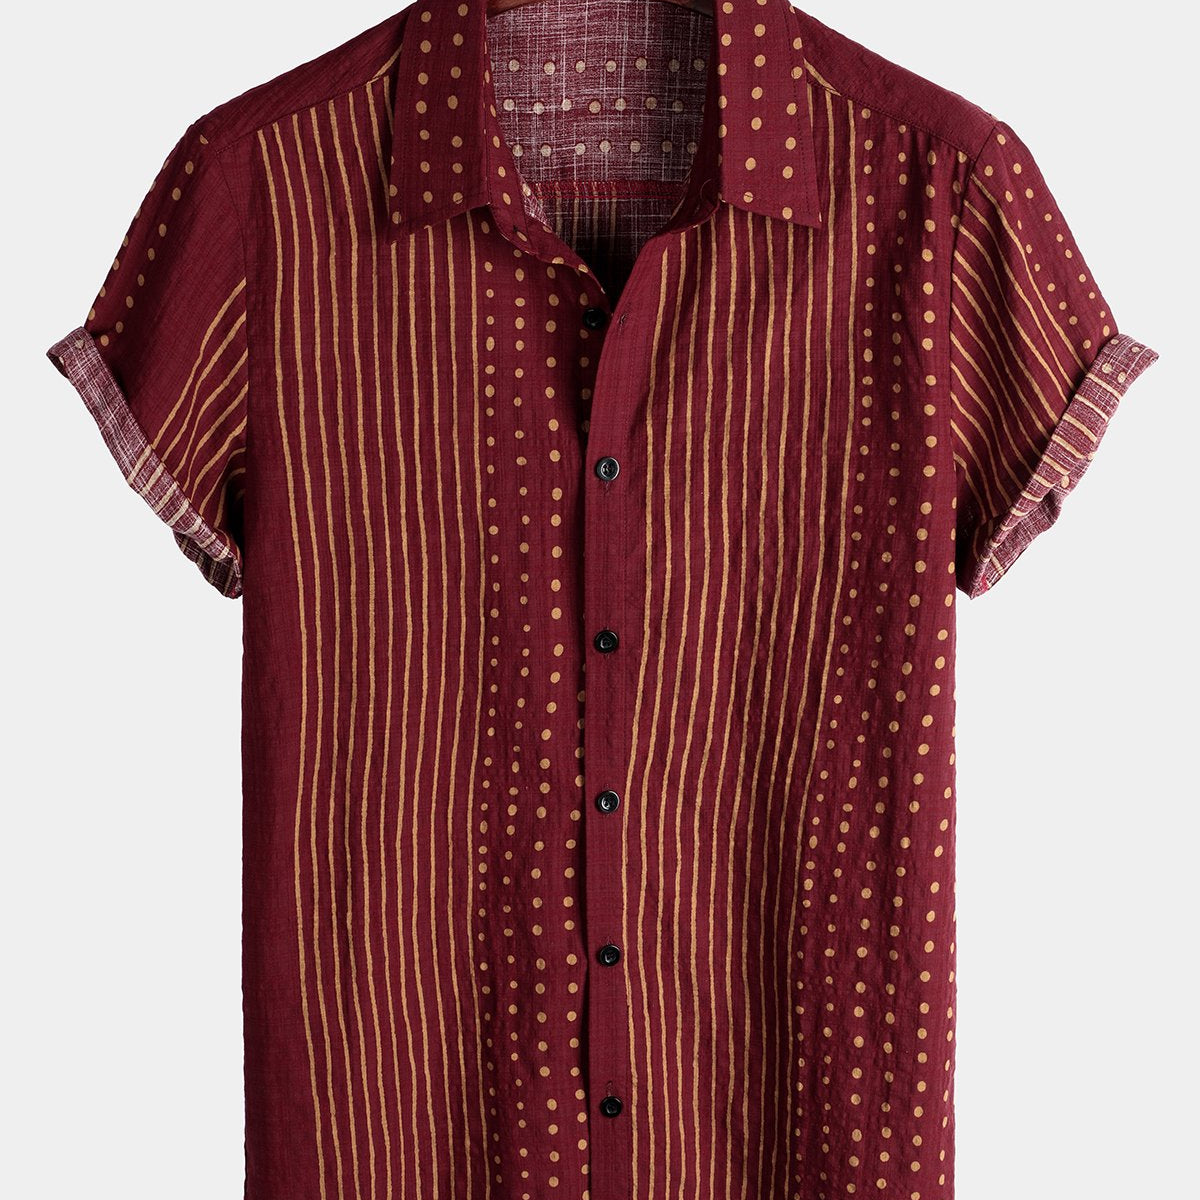 Men's Breathable Cotton Short Sleeve Striped Shirt